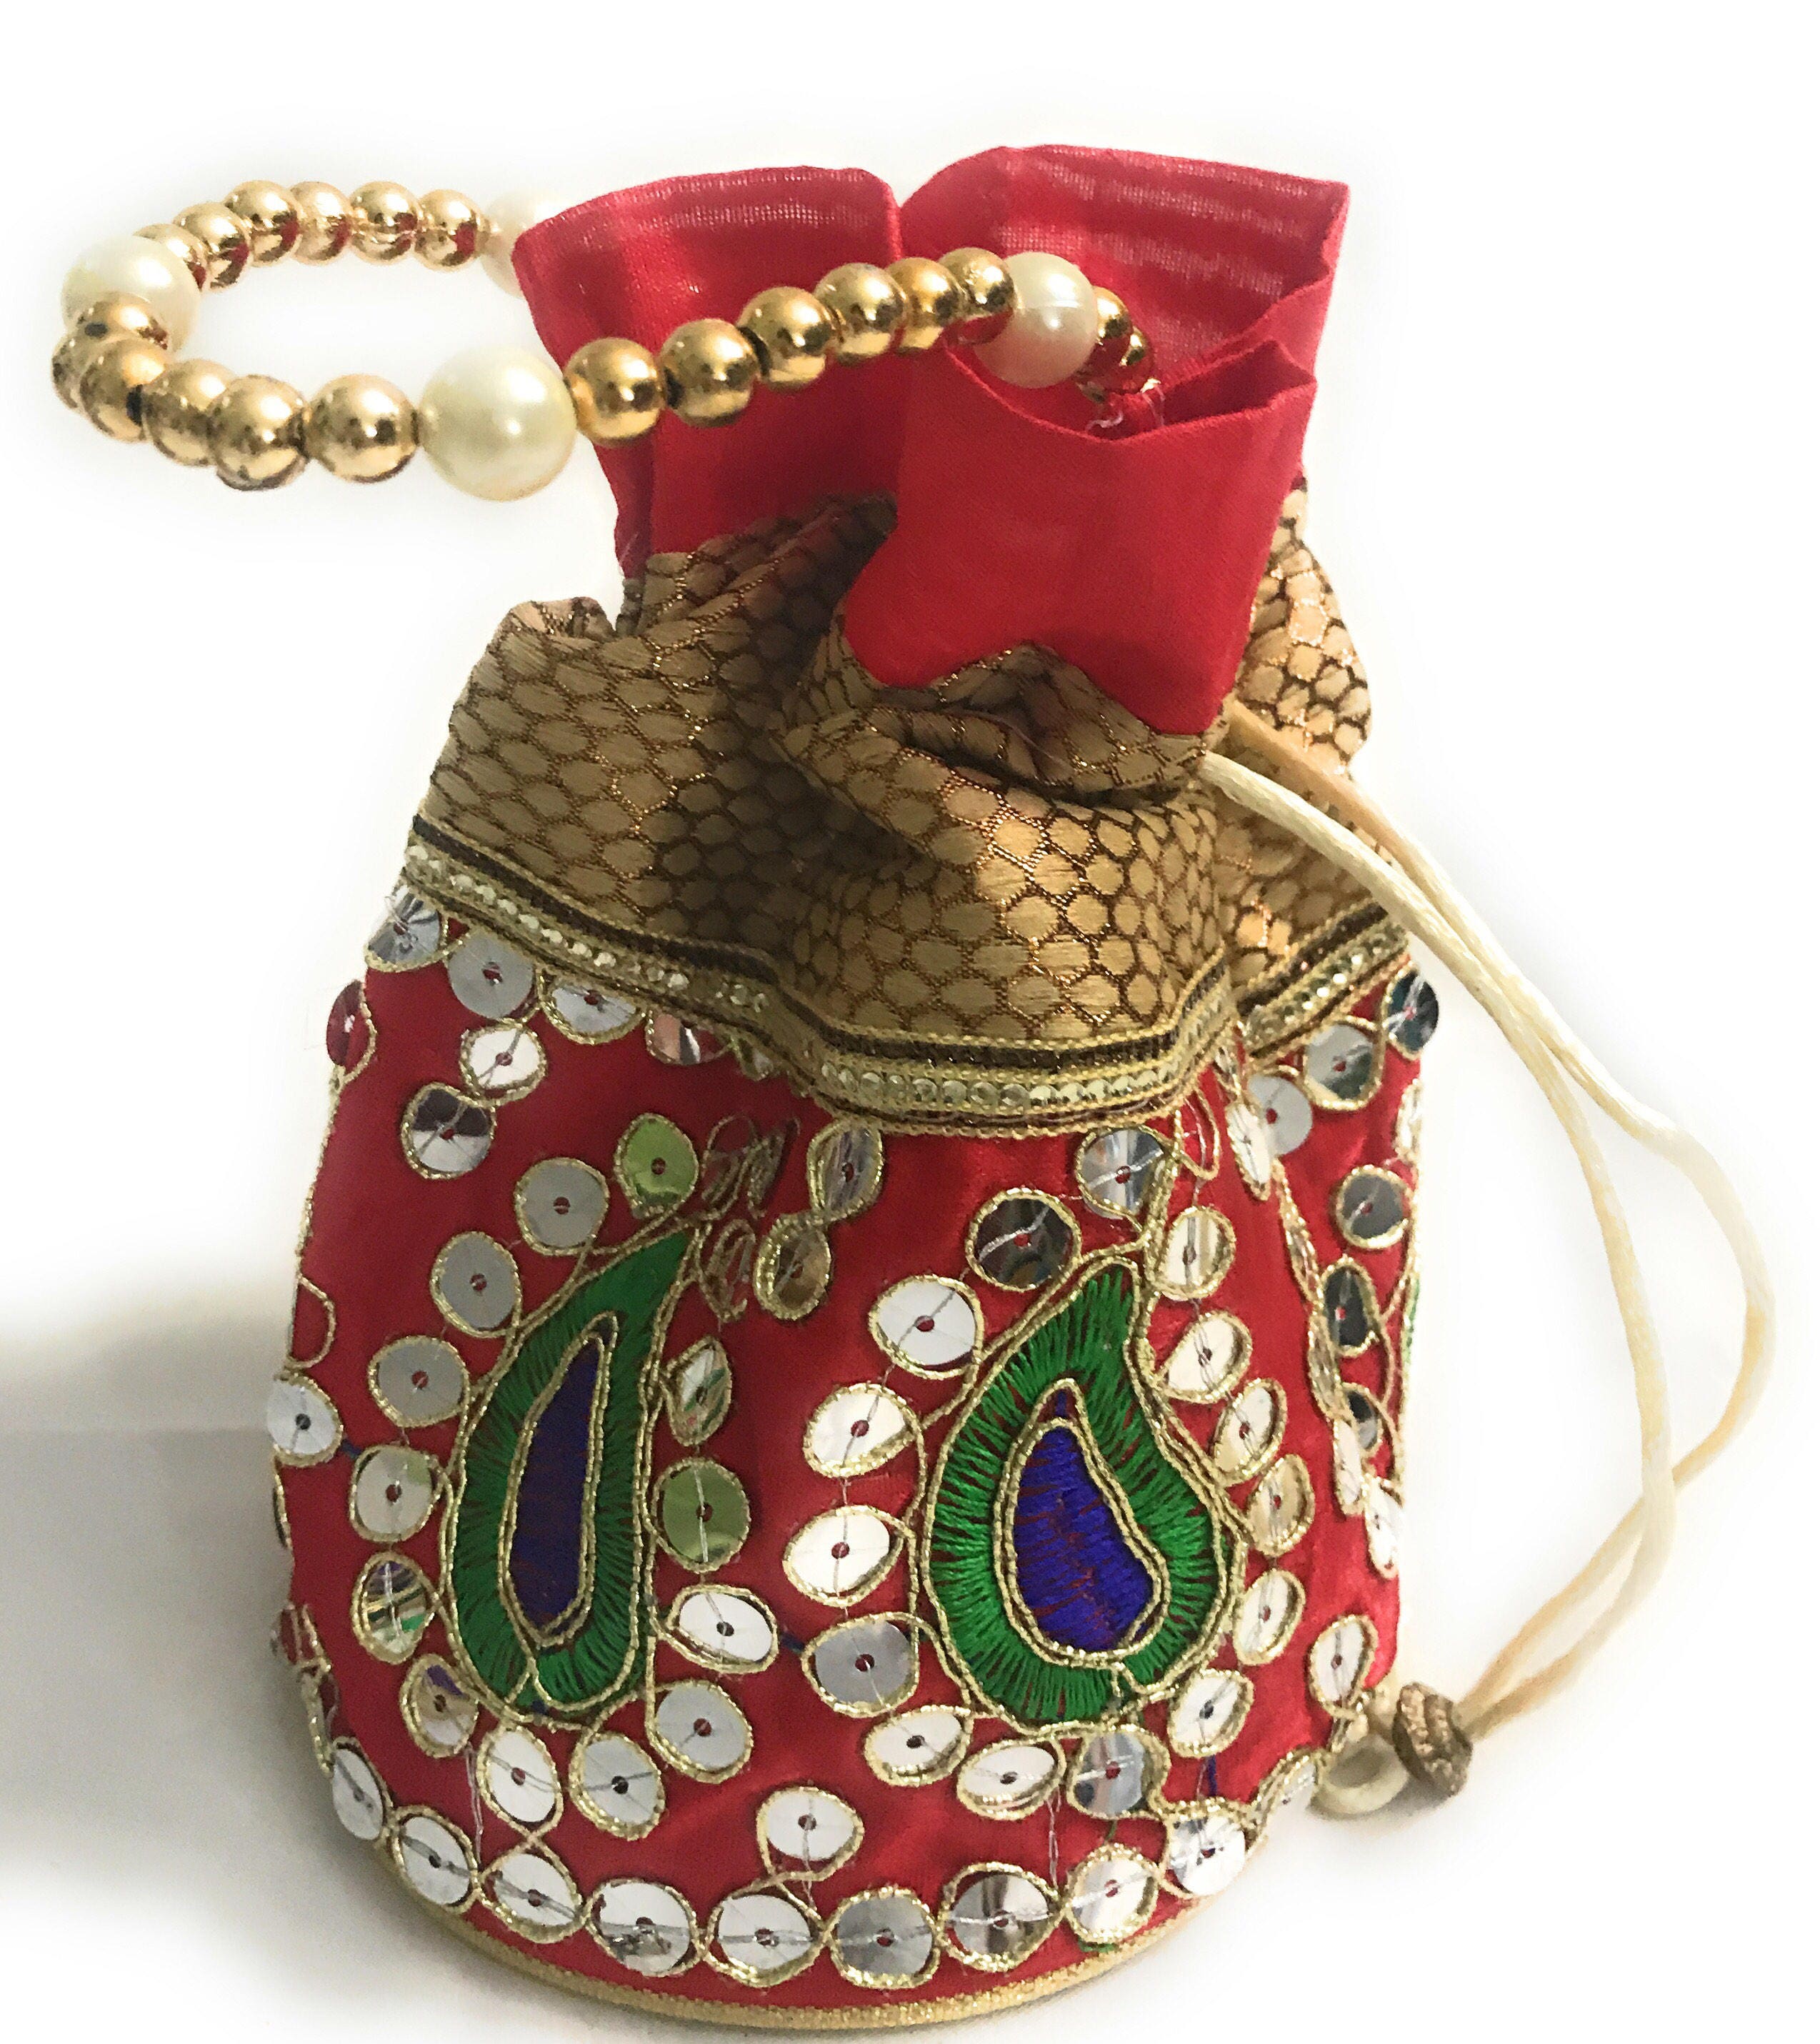 Wholesale Bandhej Bag & Clutch Combo, Return Gift Bags, Indian Wedding Bags  | eBay